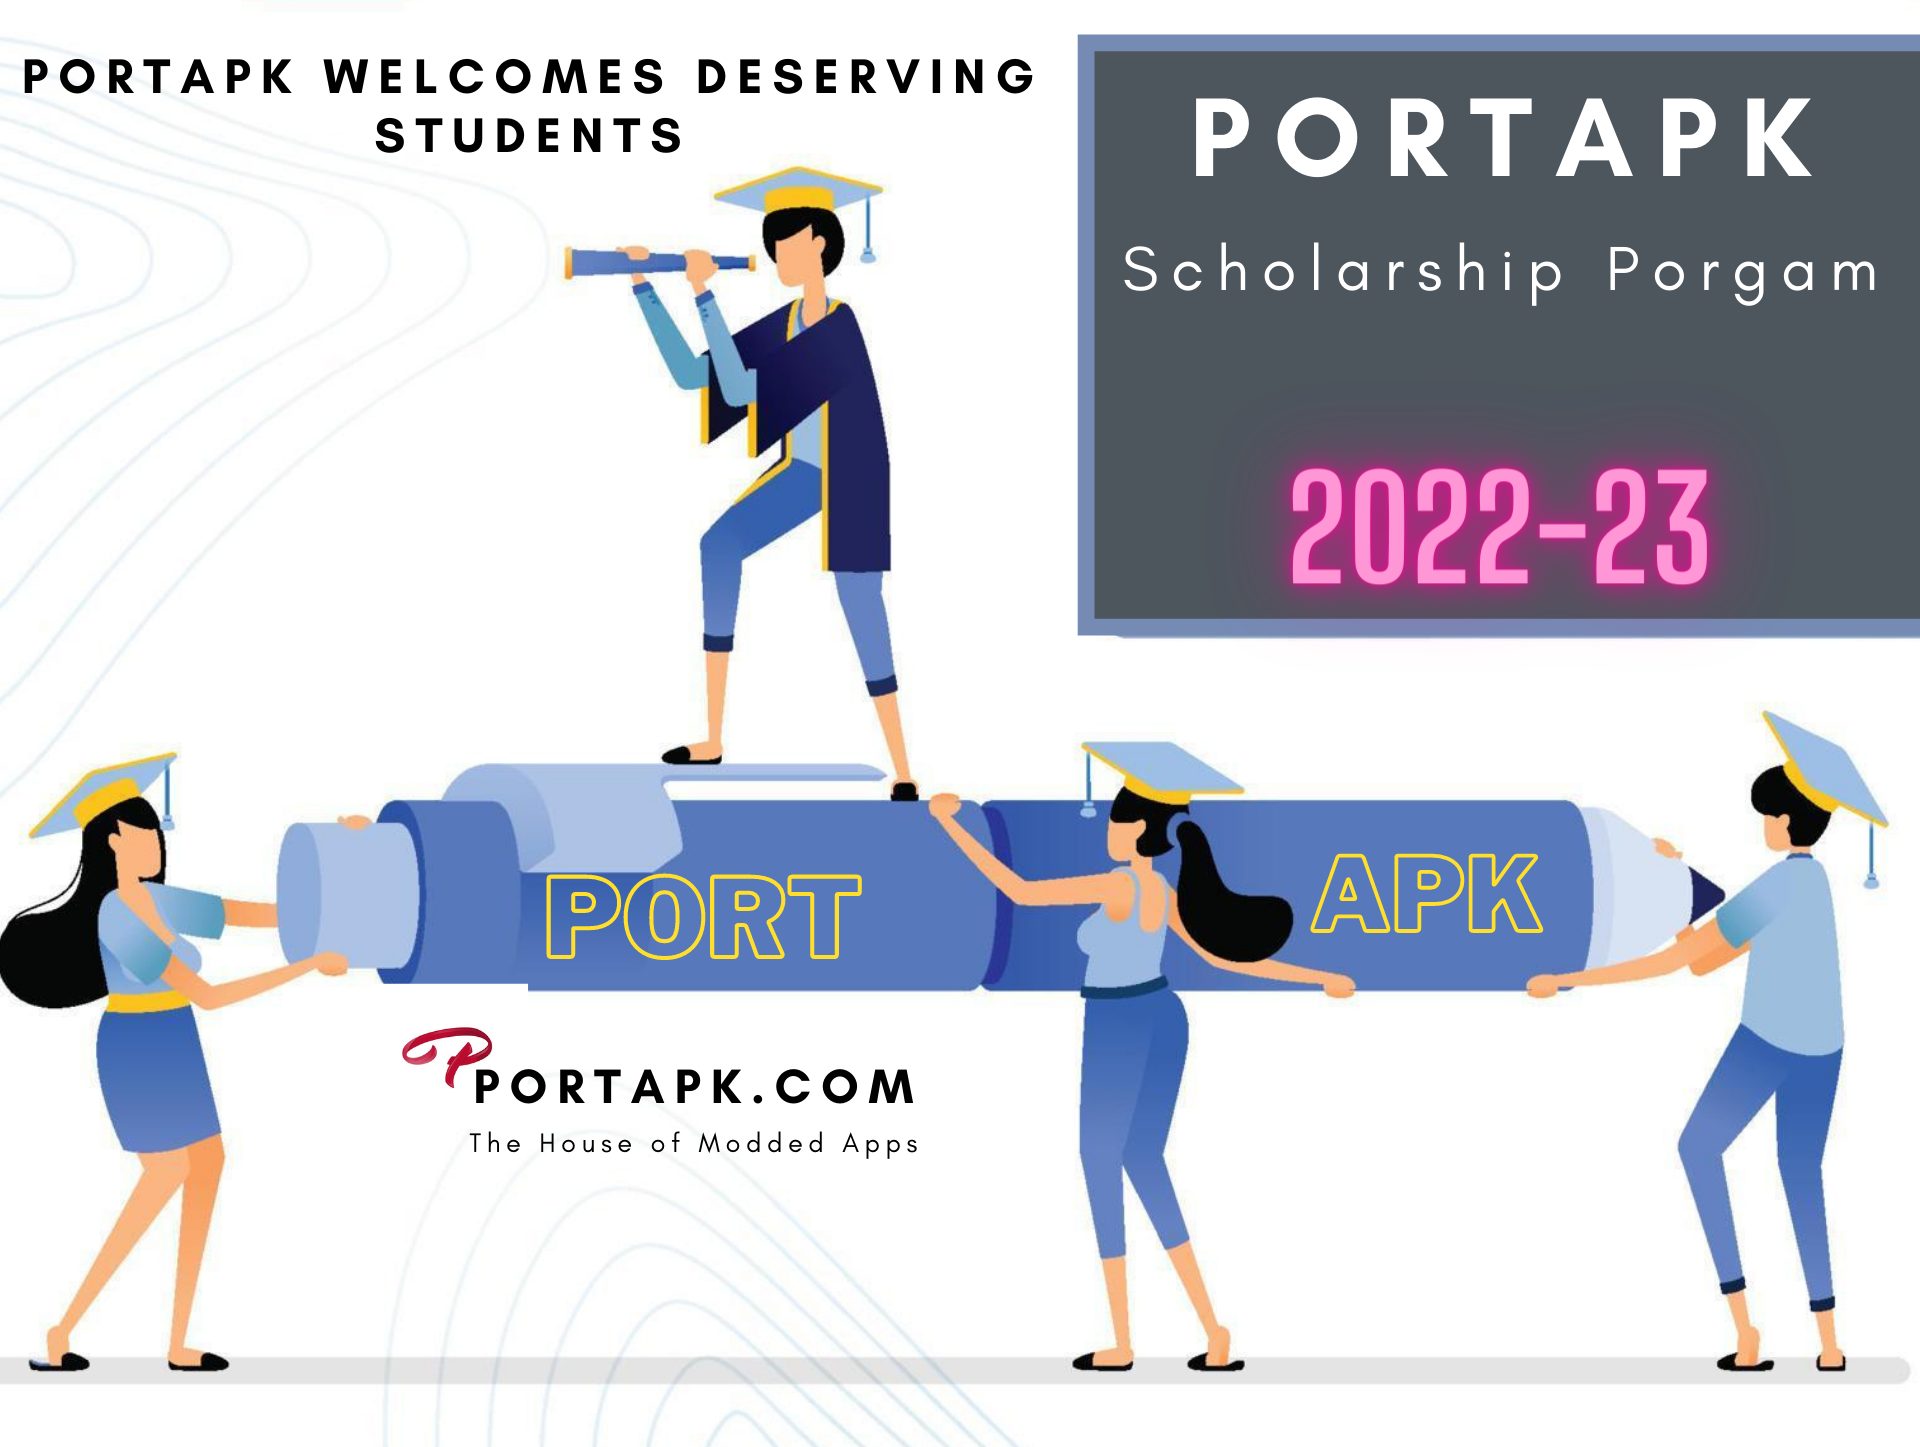 Portapk Scholarship Program 2022-23